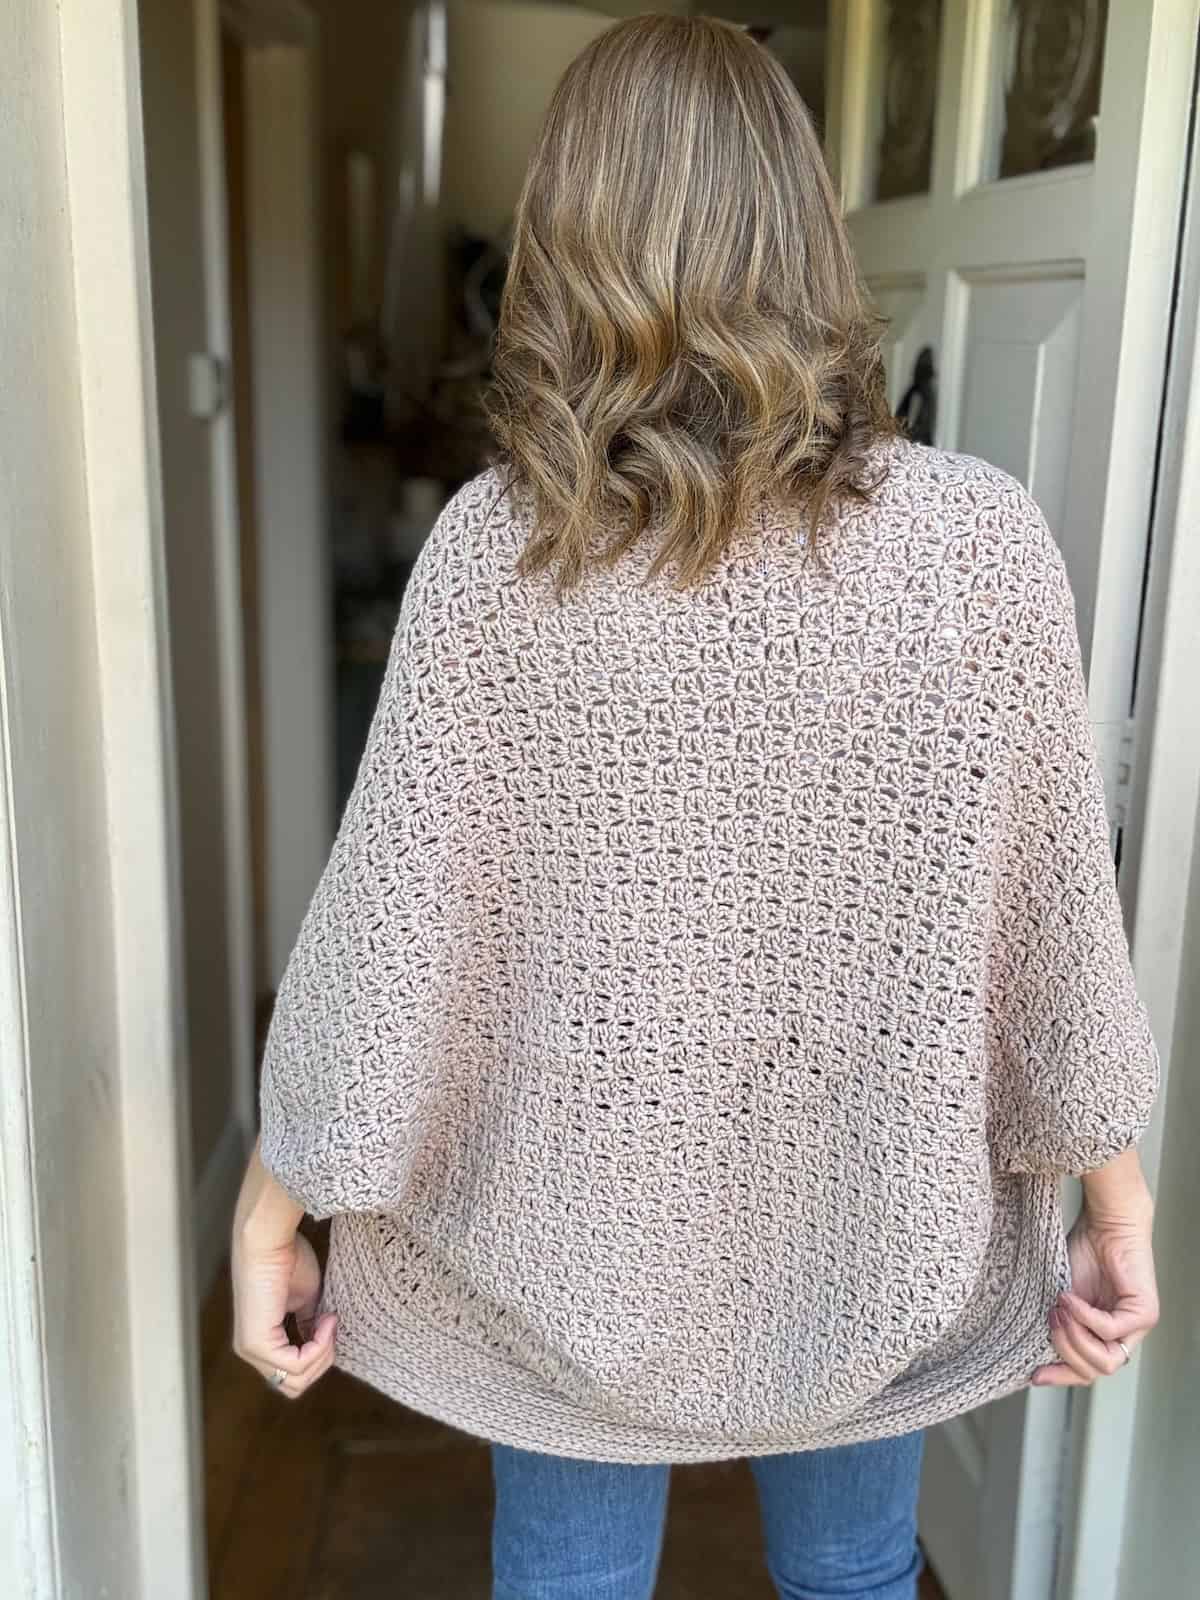 Back view of woman wearing oversized crochet cardigan standing in a doorway.